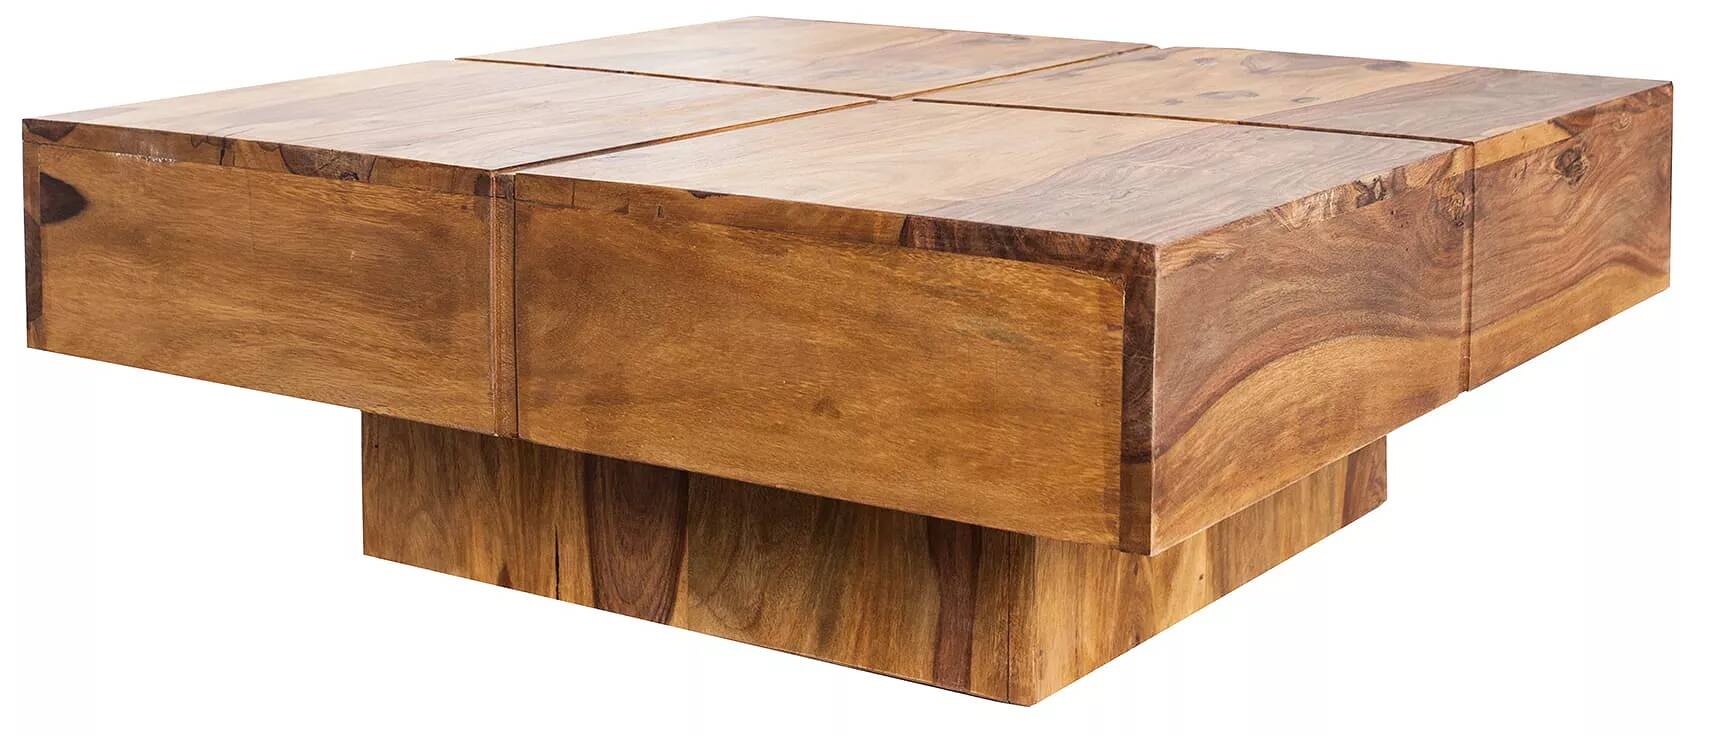 Table basse en bois massif sheesham